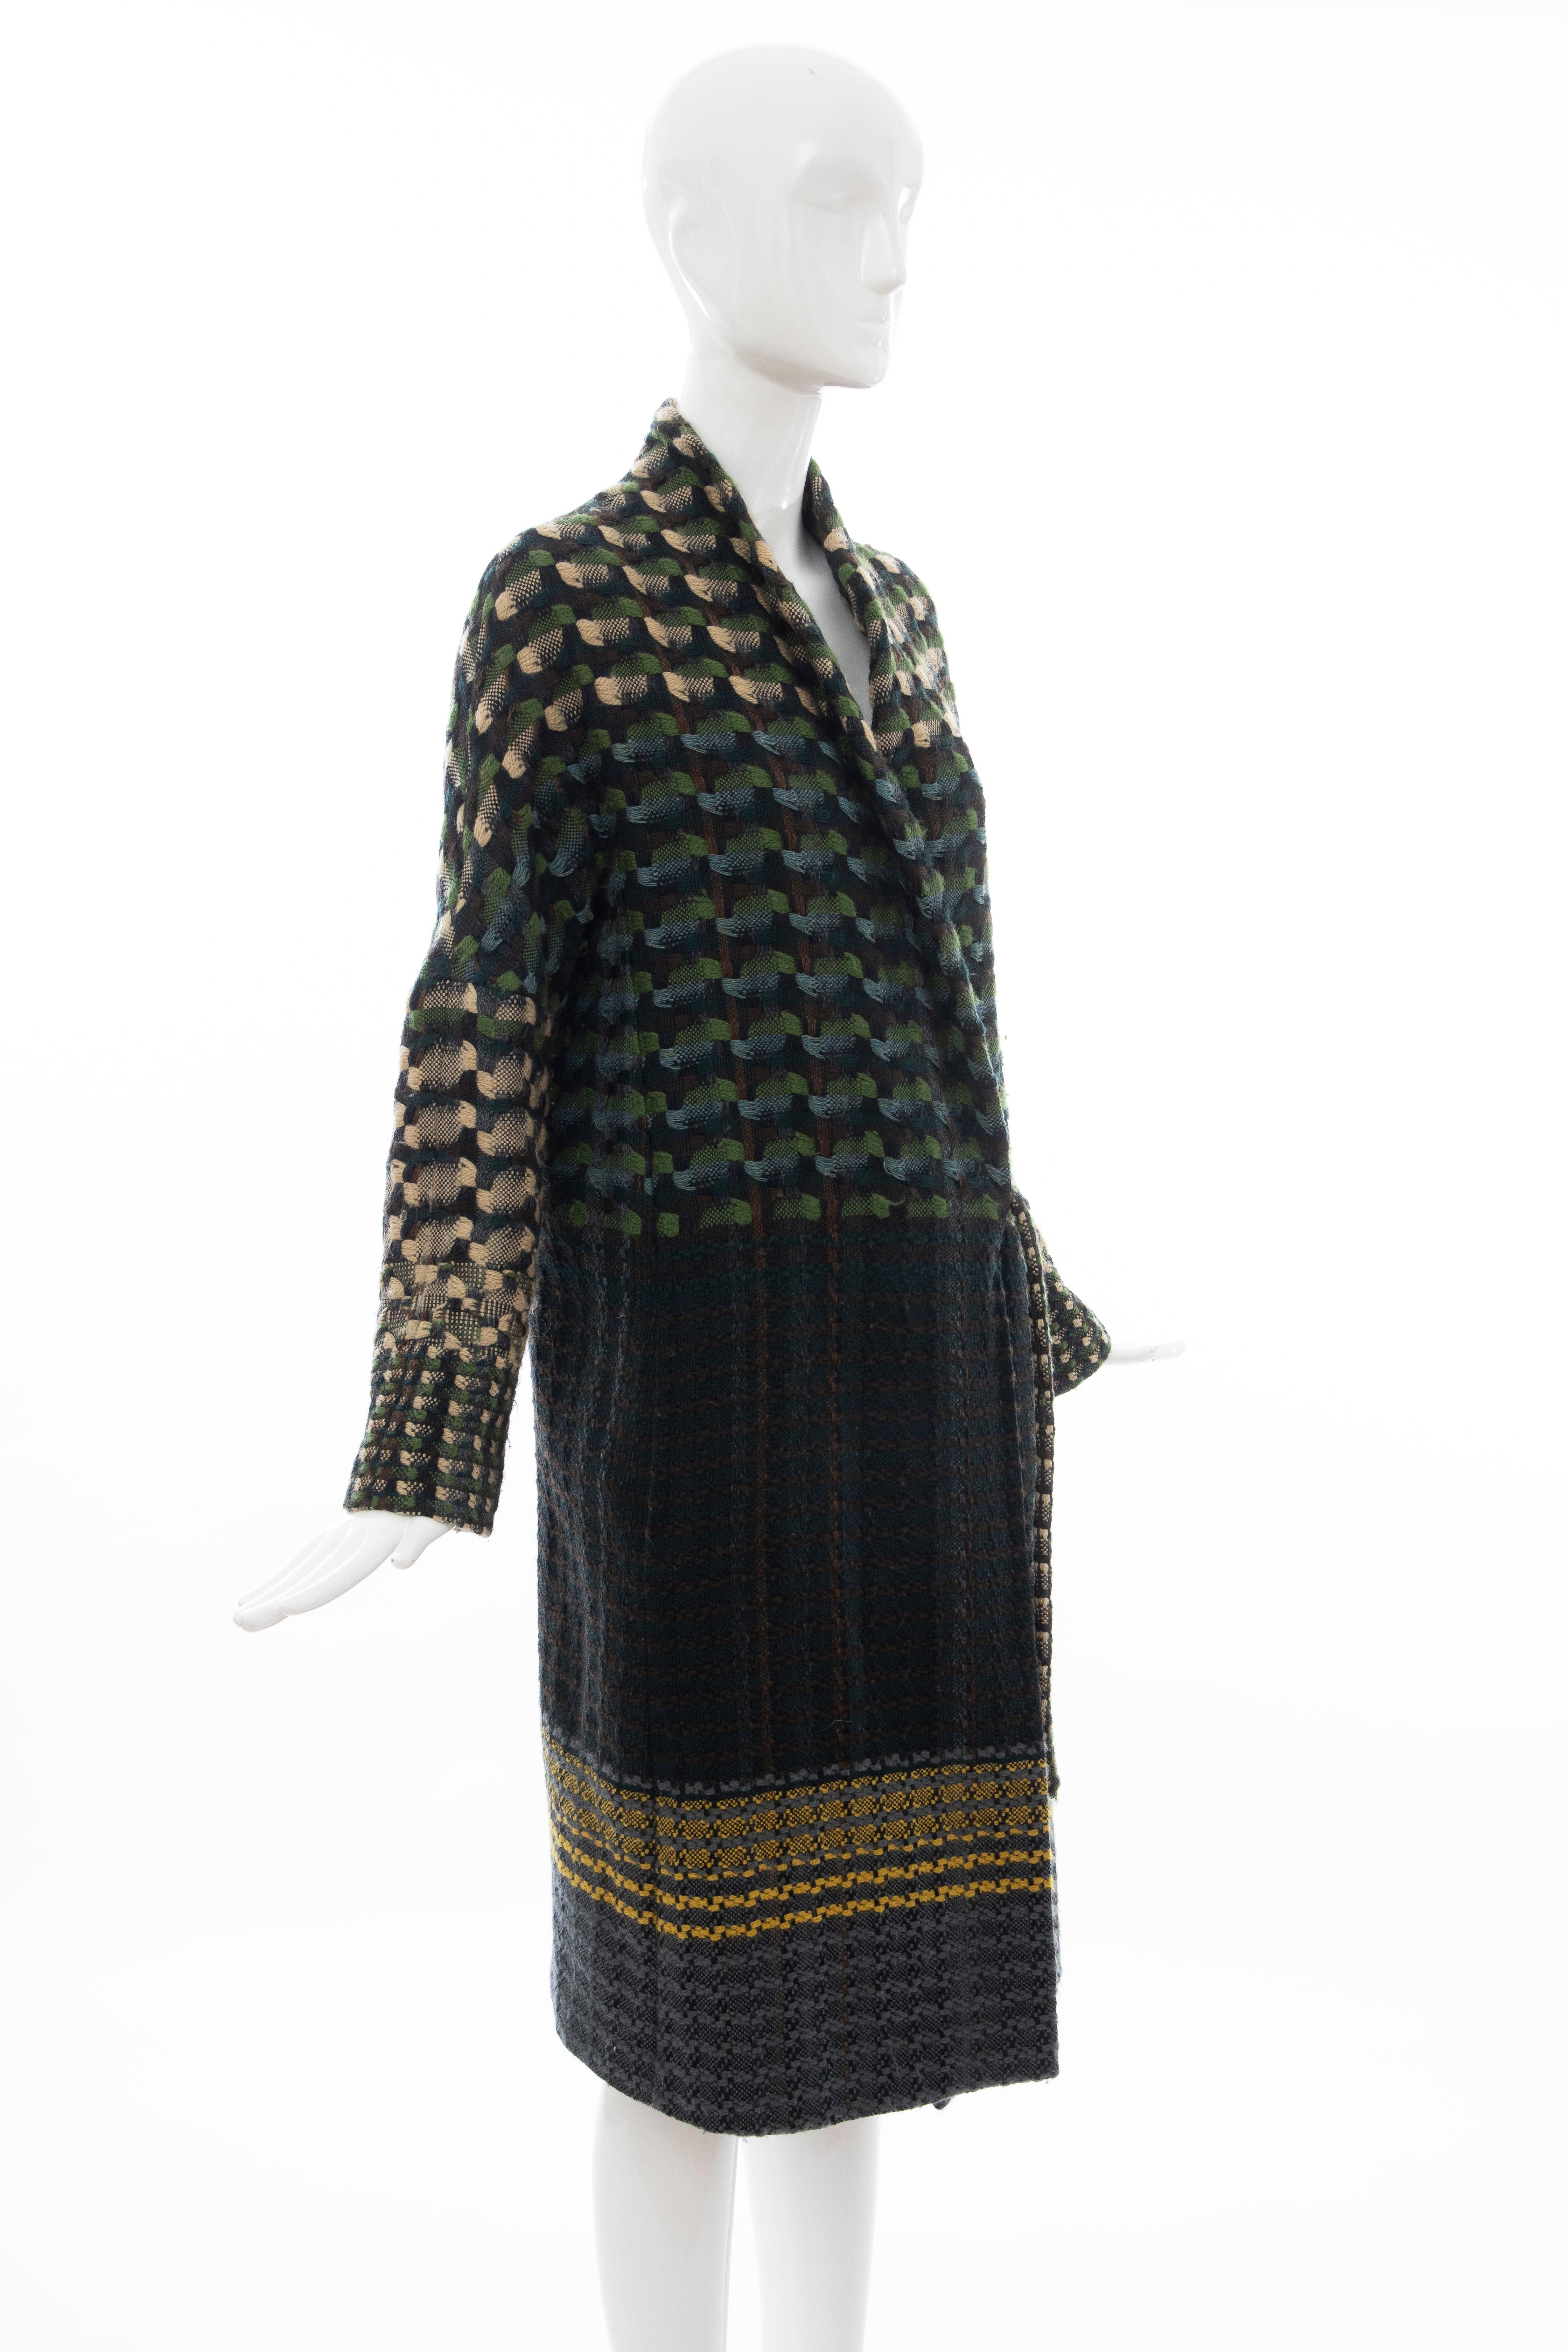 Dries van Noten Runway Wool Plain Weave Tweed Coat, Fall 2004 In Good Condition For Sale In Cincinnati, OH